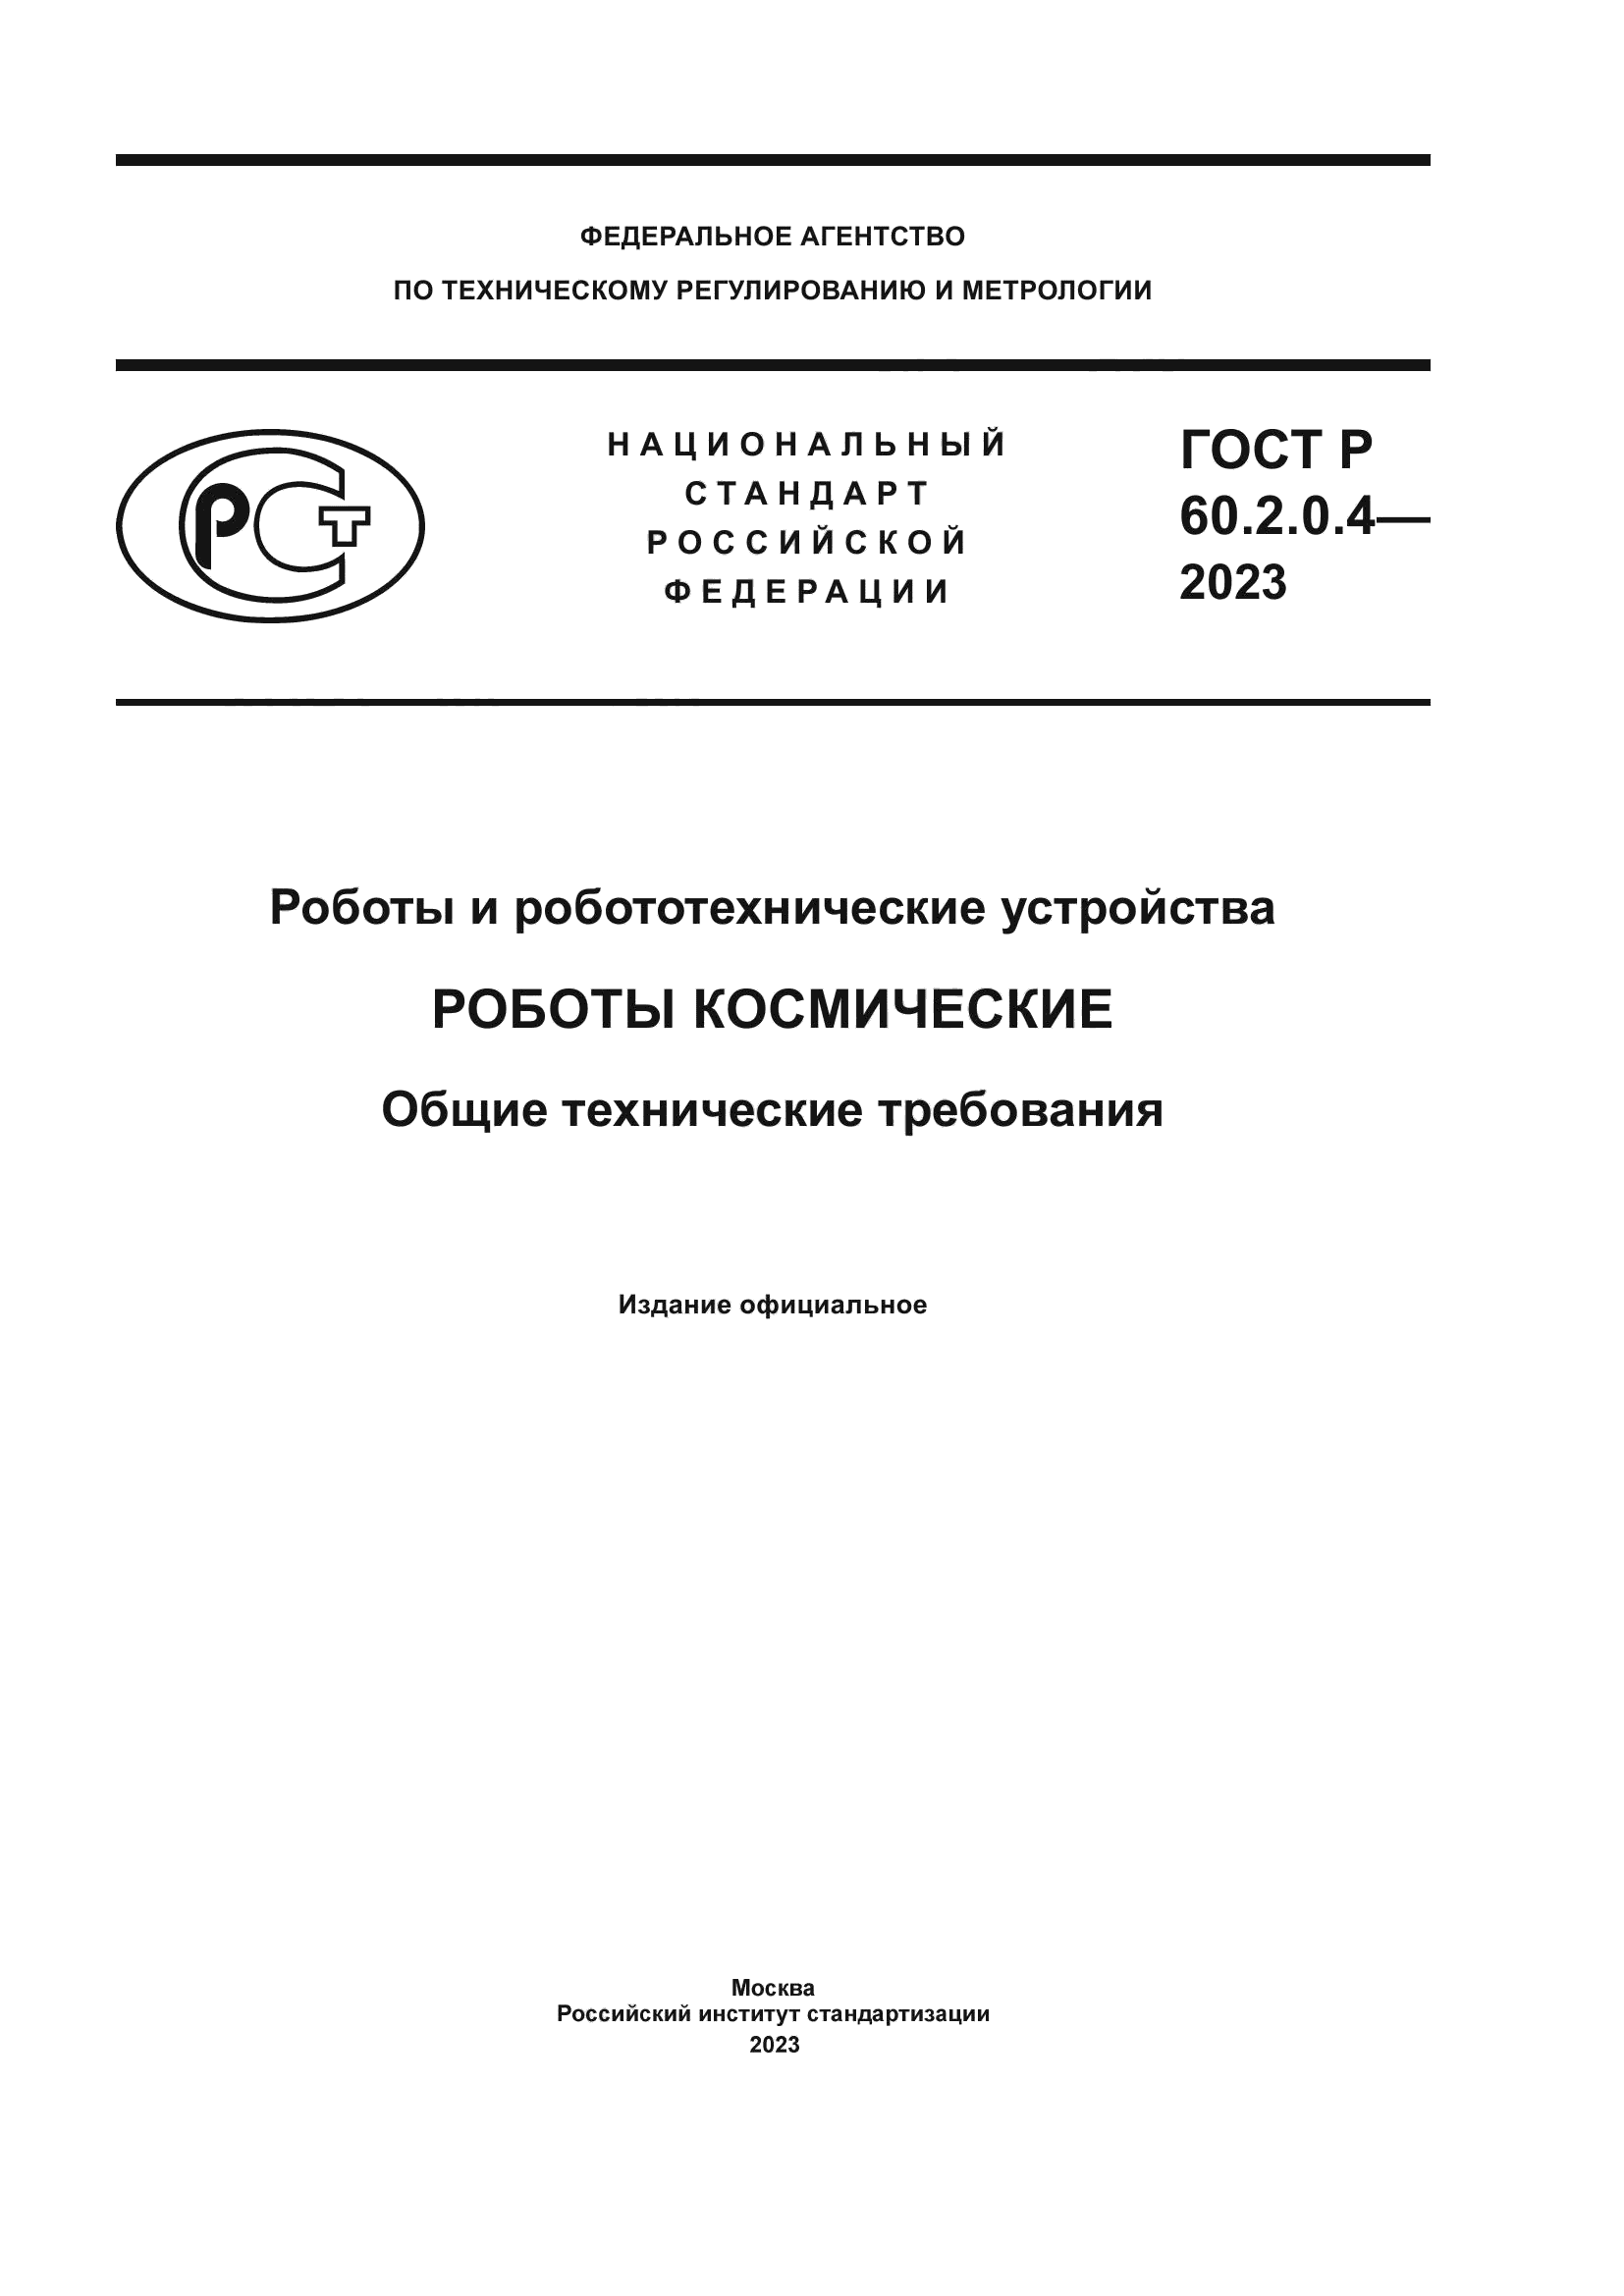 ГОСТ Р 60.2.0.4-2023